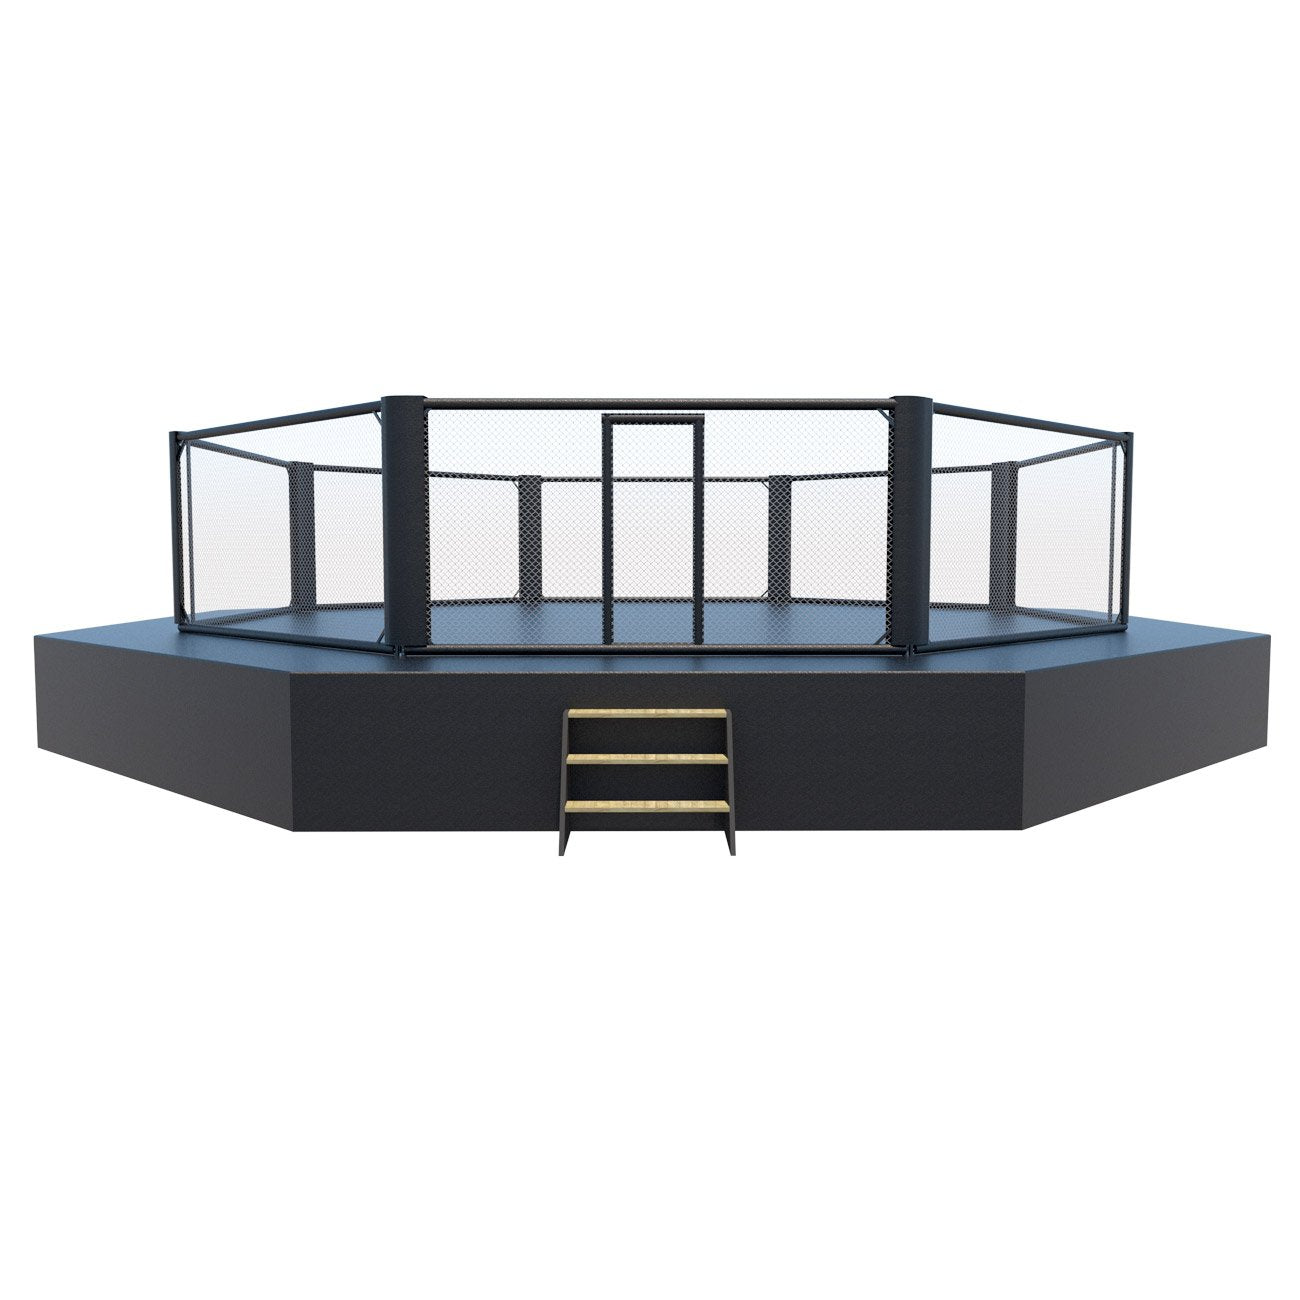 MMA Competition Cage 7x7m + sidewalk 1m - black